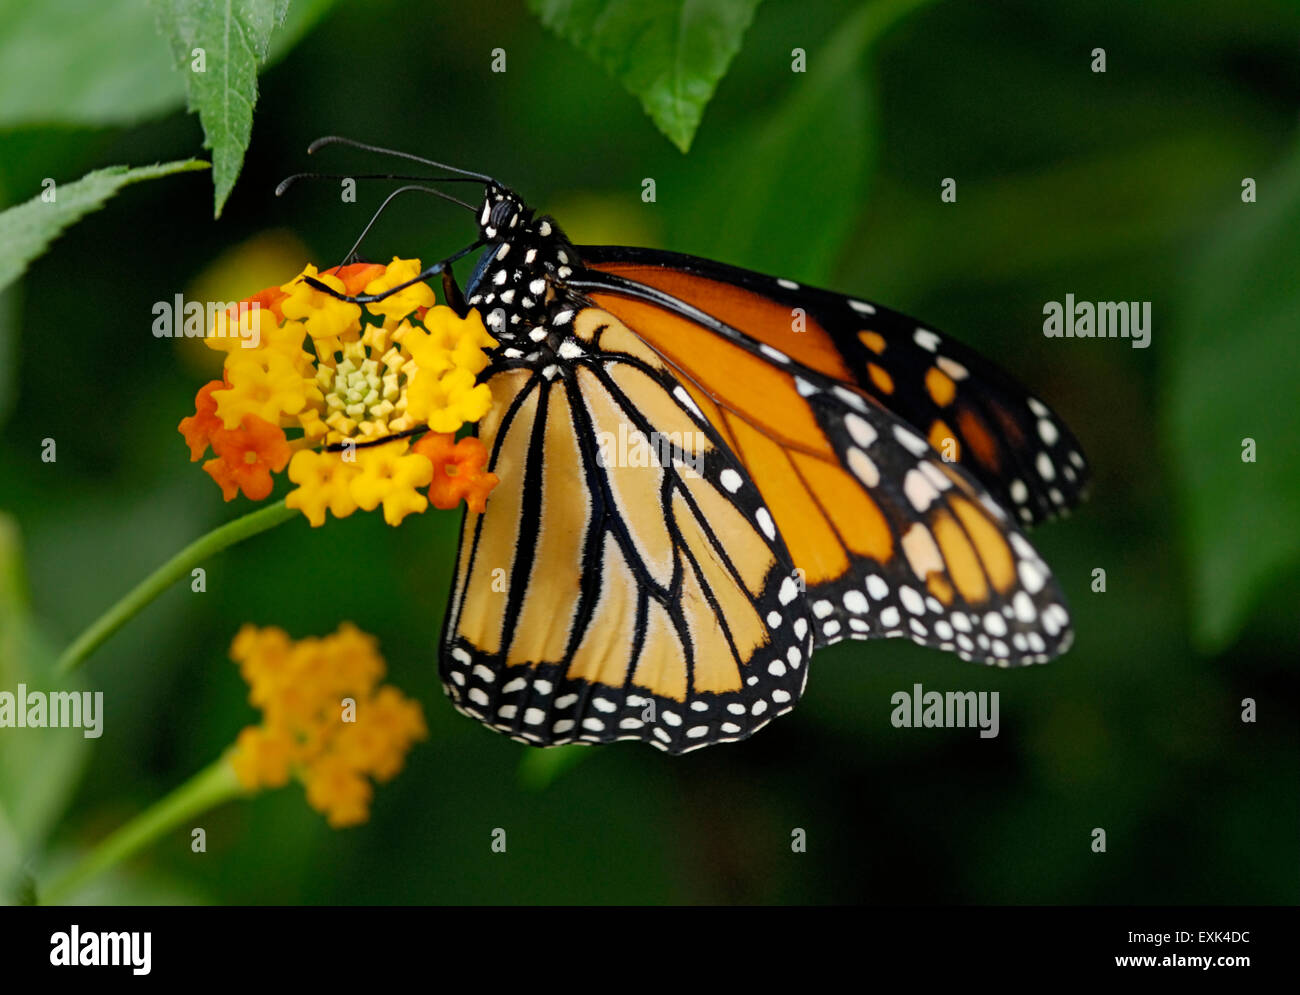 Mariposa Monarca, Danaus plexippus, alimentándose de Lantana sp. flor de las mariposas proboscis es visto extendiendo en la flor Foto de stock